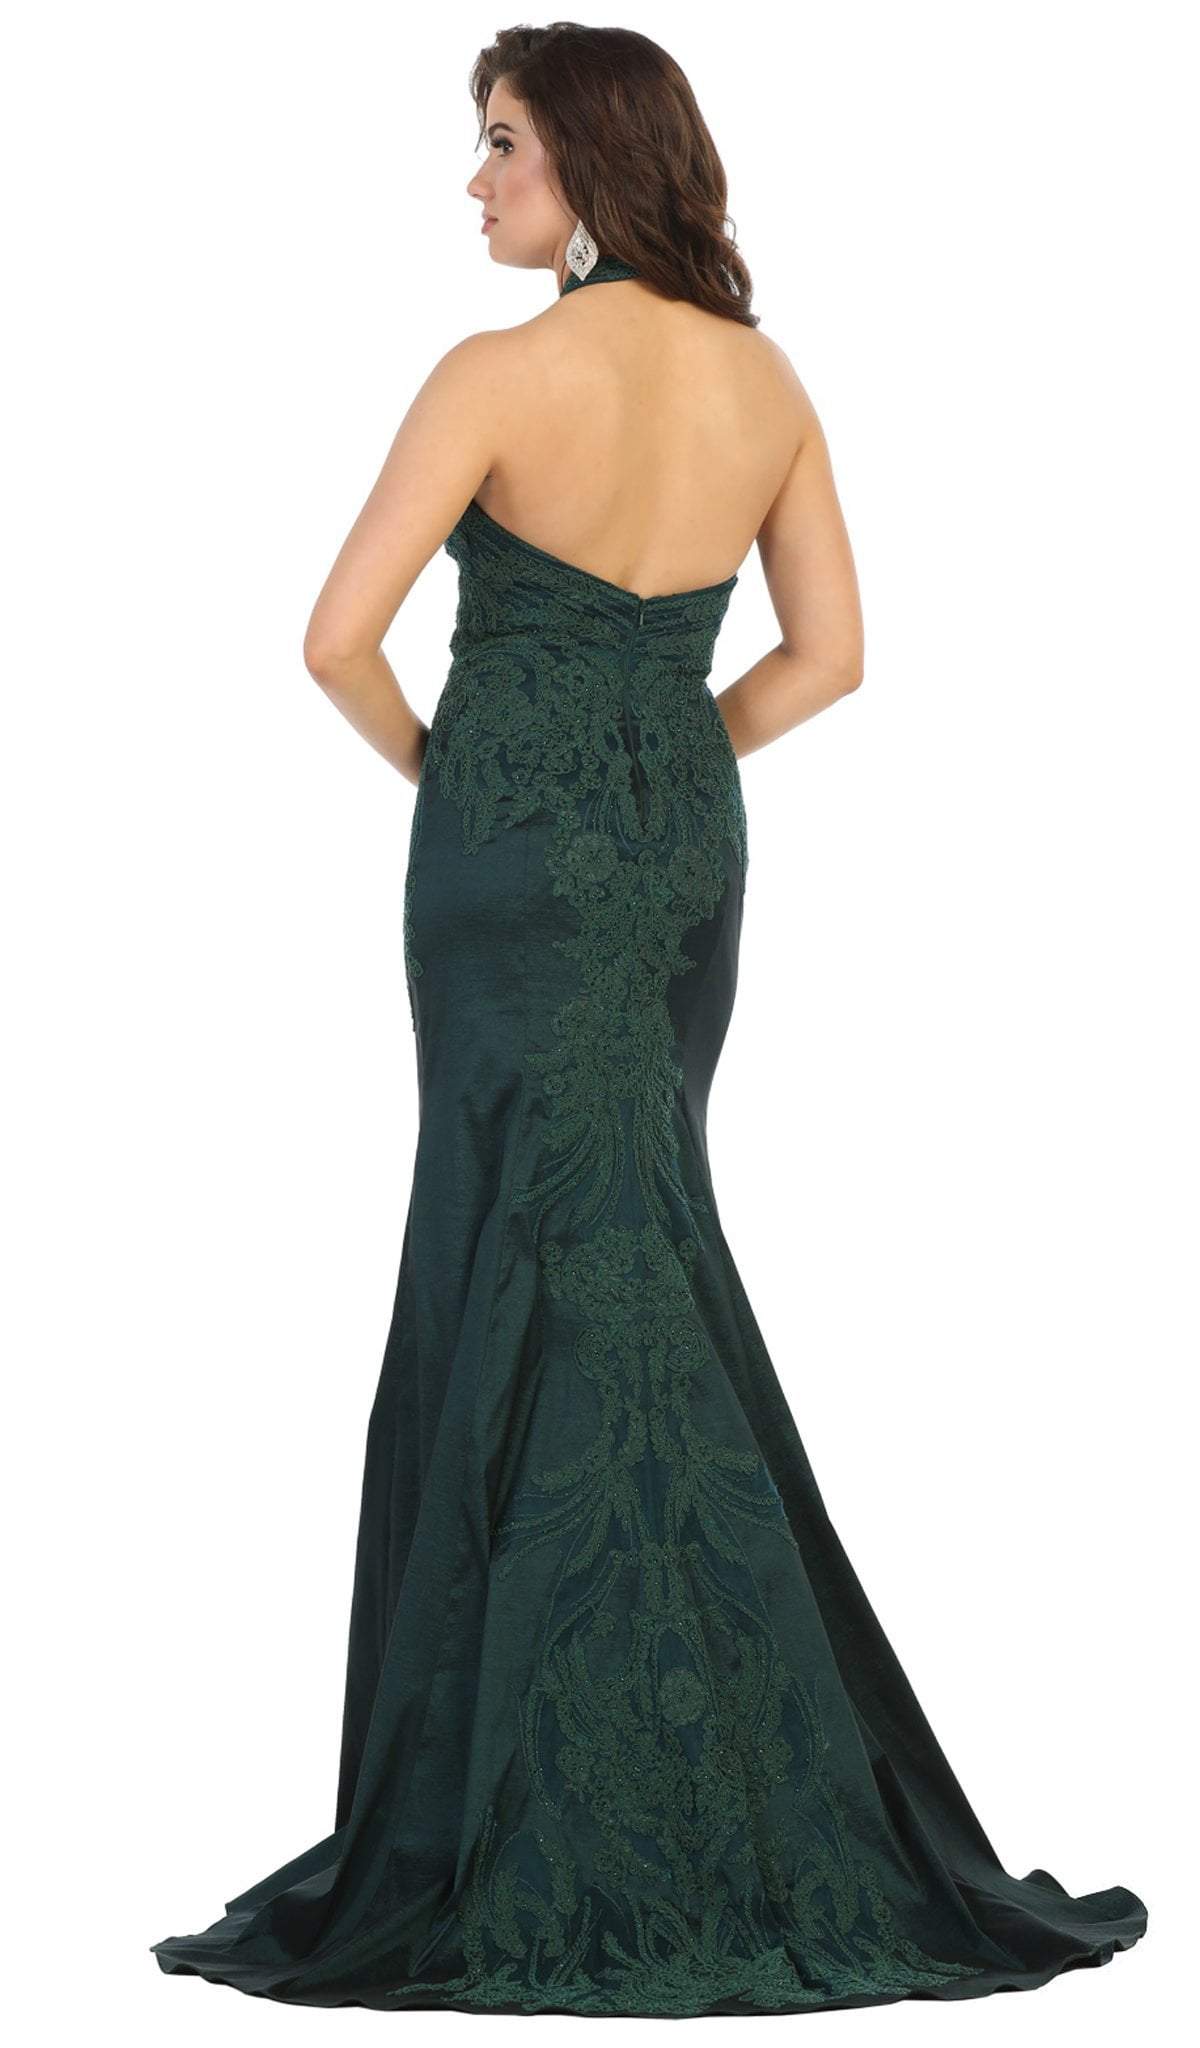 May Queen - RQ7743 Appliqued Halter Mermaid Gown In Green